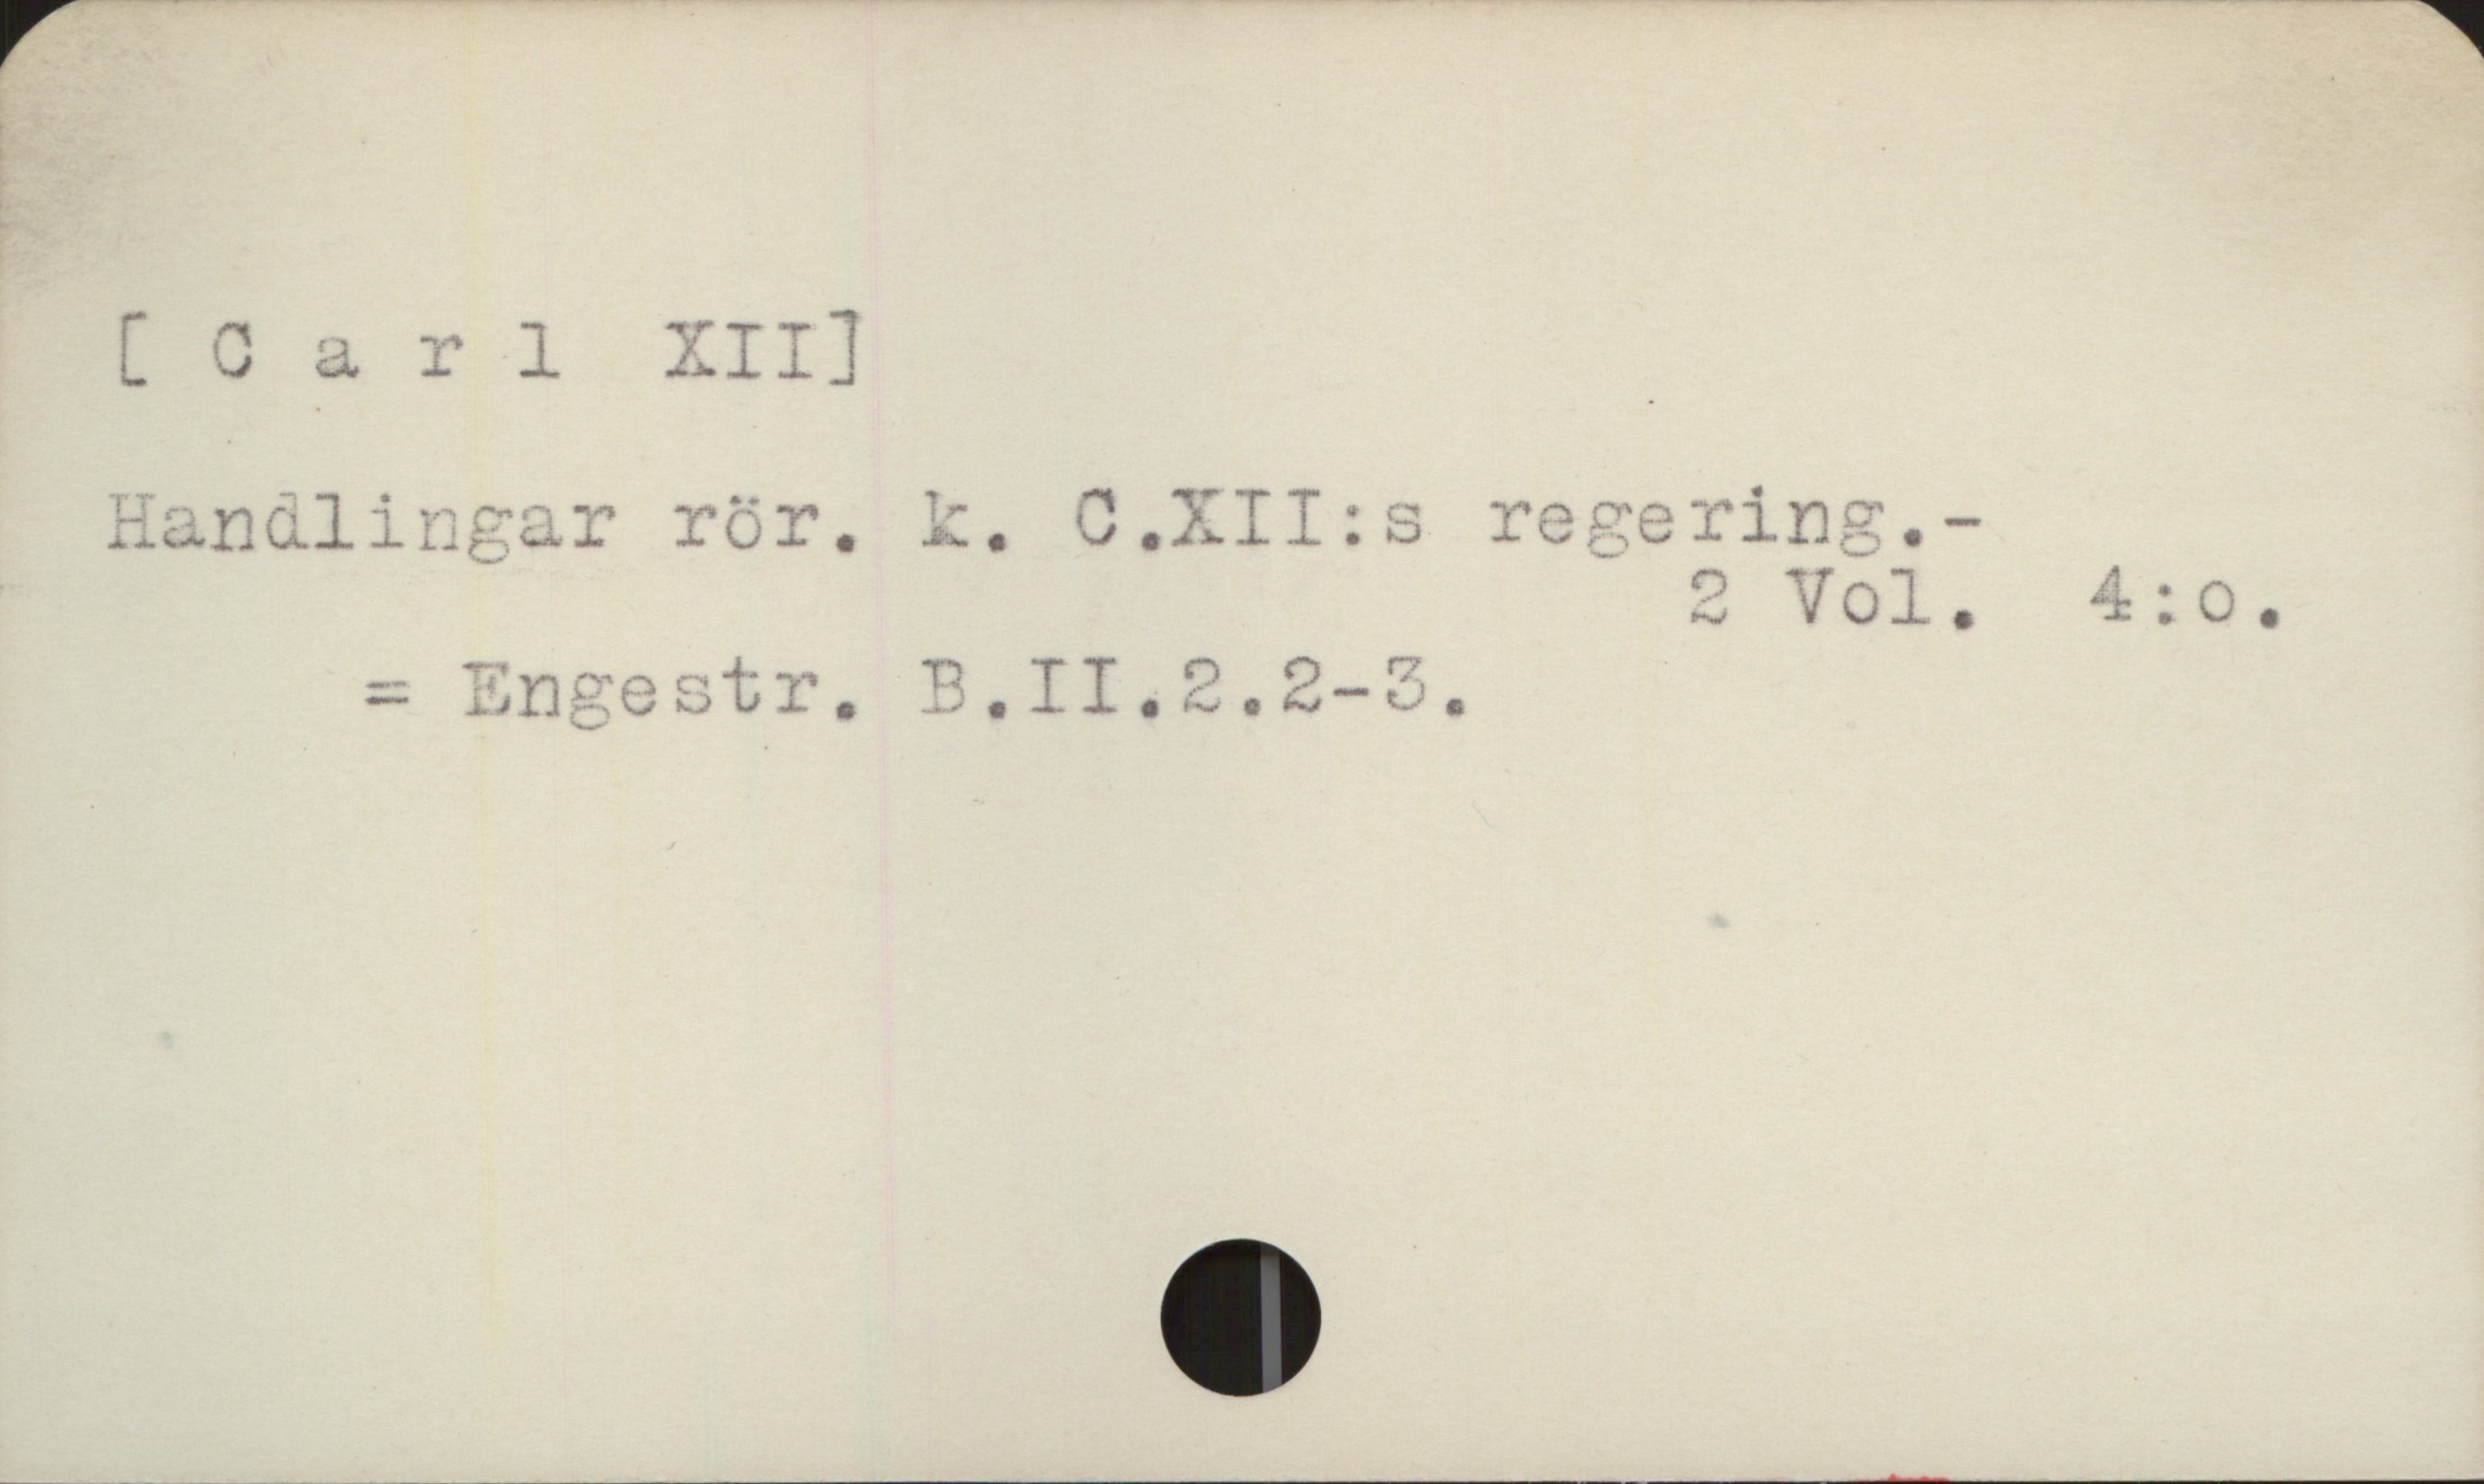  [ CGarl XIII
Hanalingar rör. k. C.XIT:s recerins.-
8 Vol., 44:0.
- LnNceoestr.

